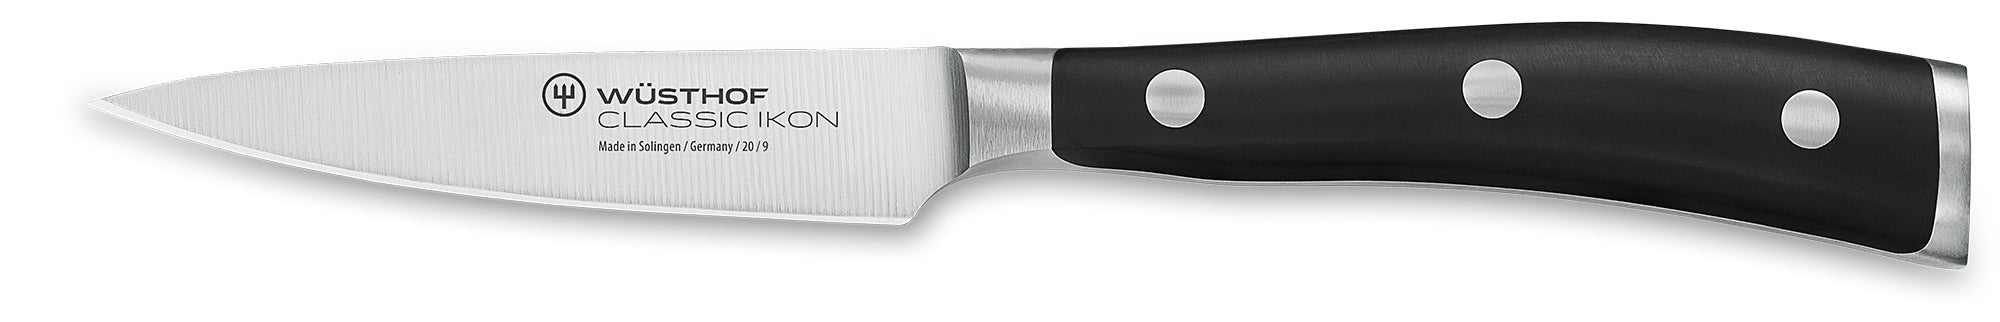 Wusthof Classic IKON Paring Knife 4086-9 Canada